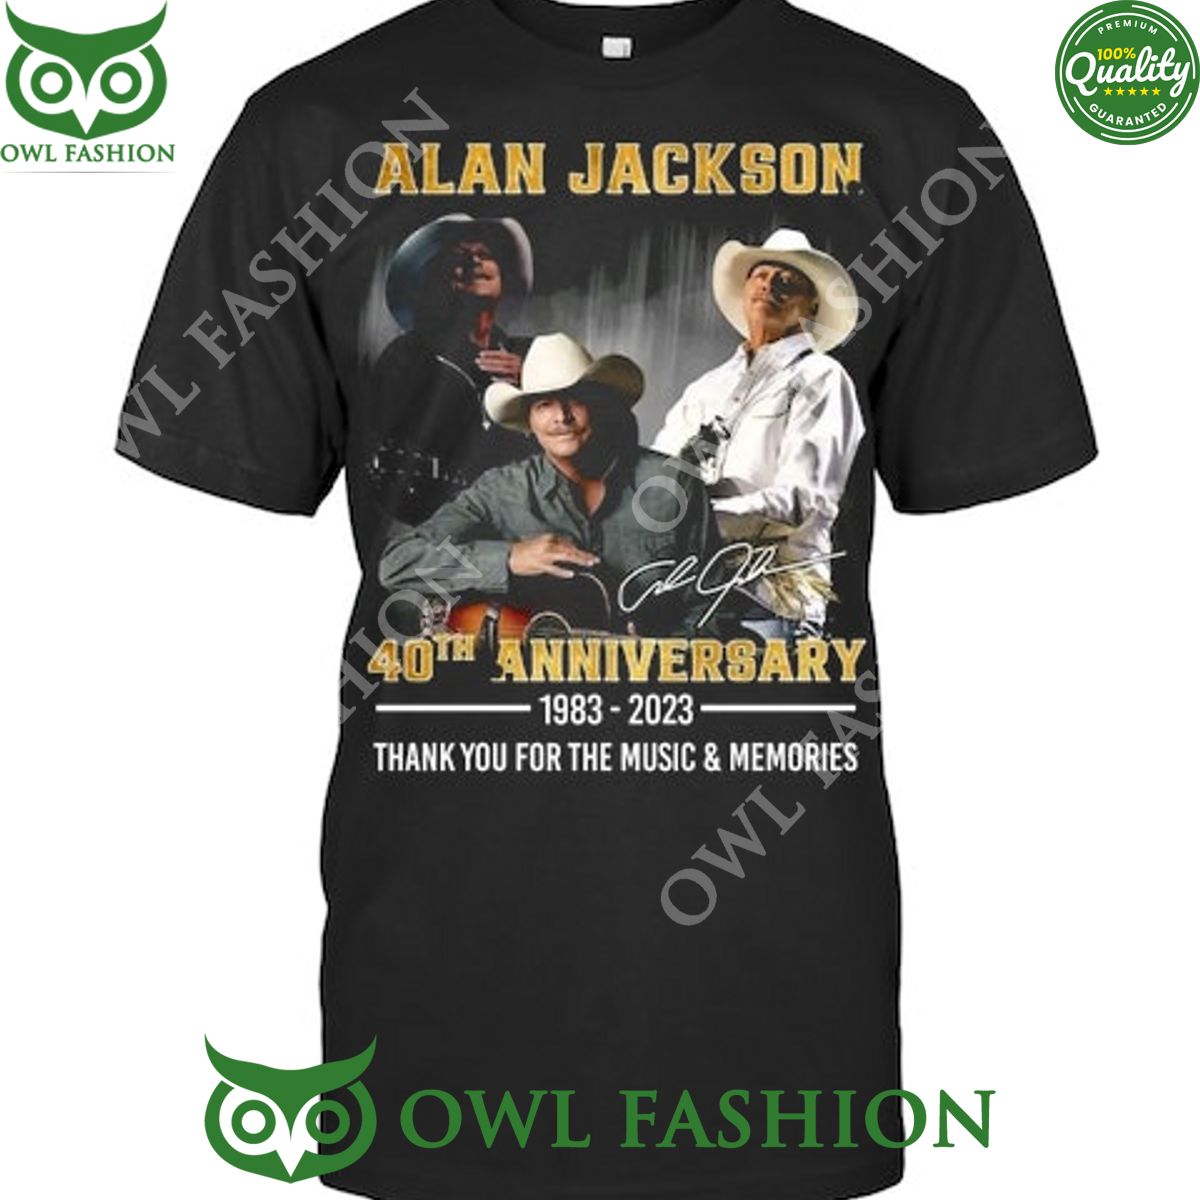 Alan Jackson Singer 40th anniversary Musisc and Memories t shirt